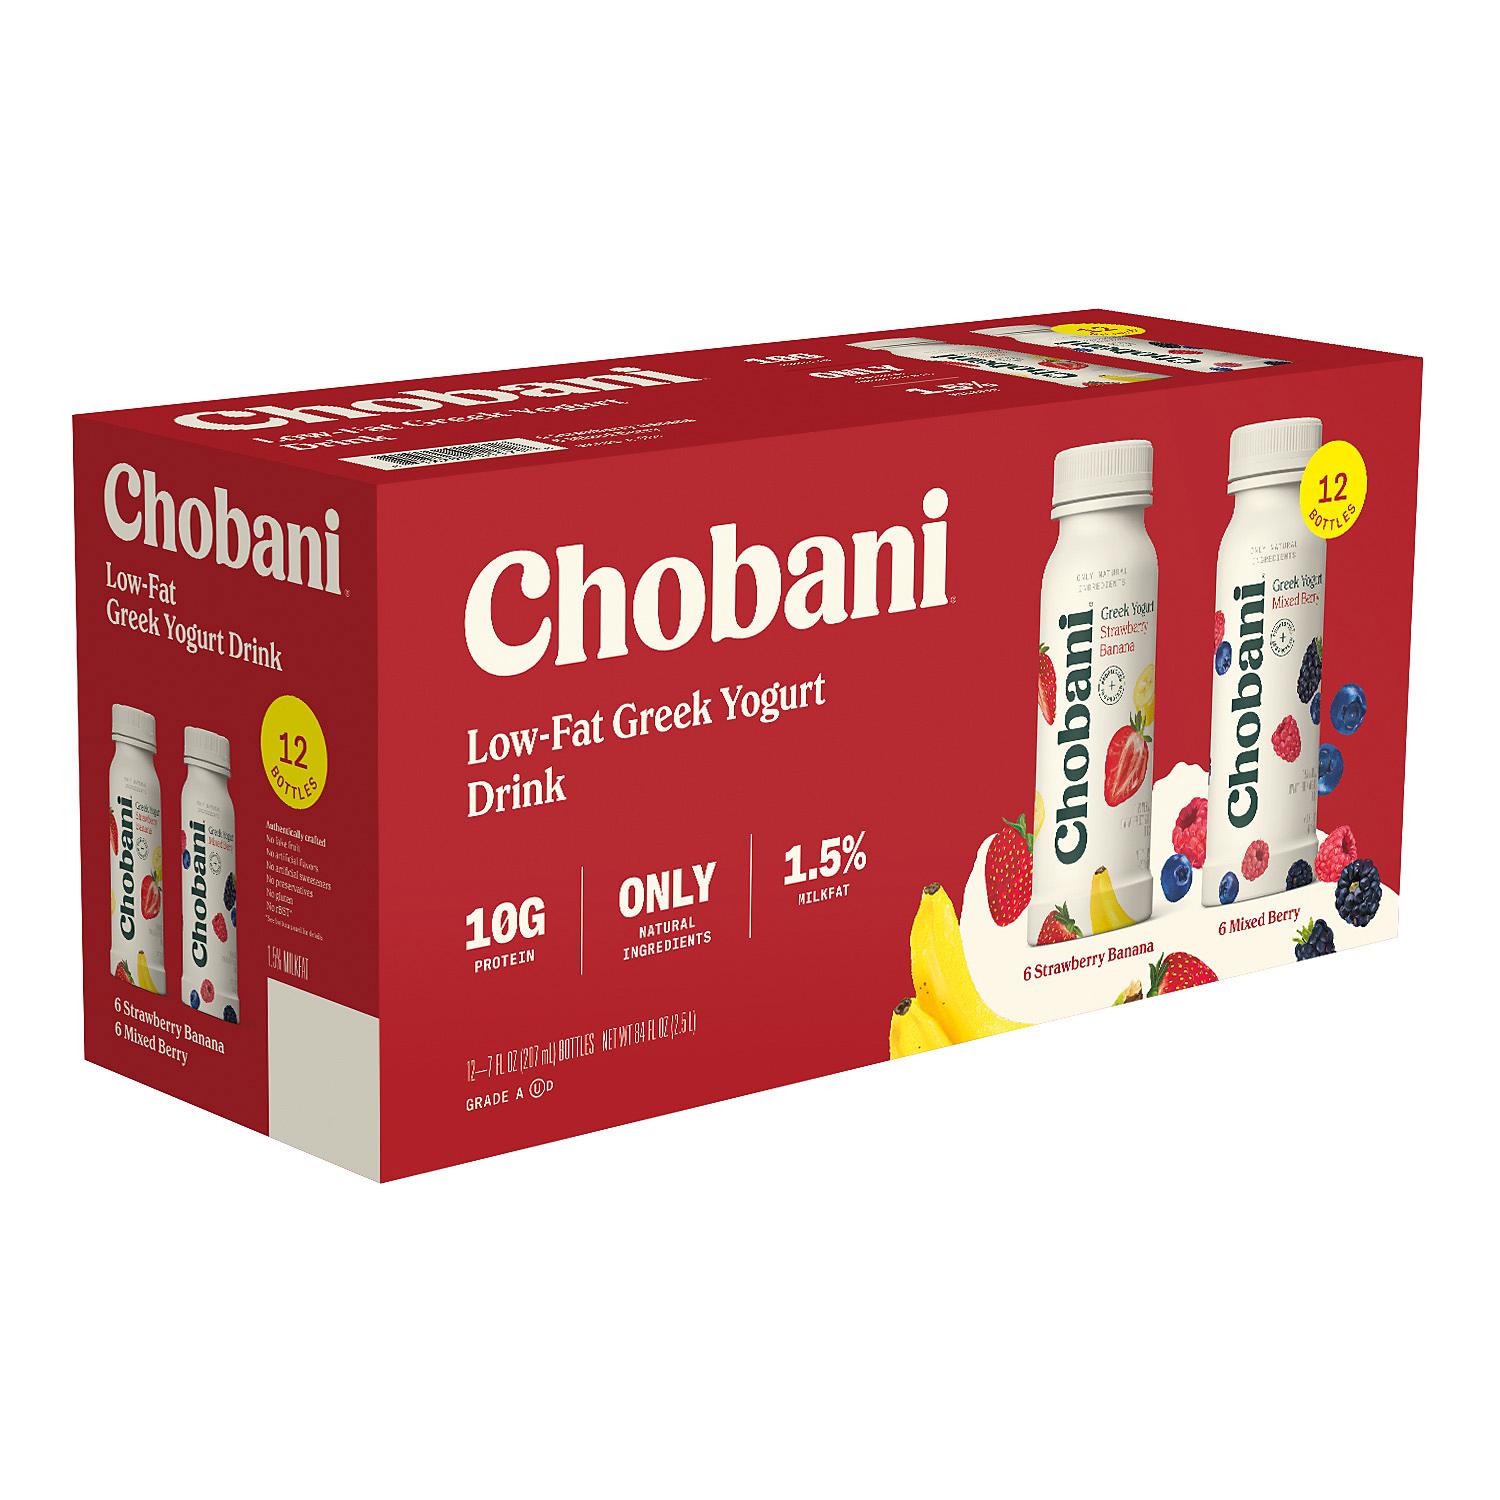 Chobani Low-Fat Greek Yogurt Drink, 12, 47% OFF